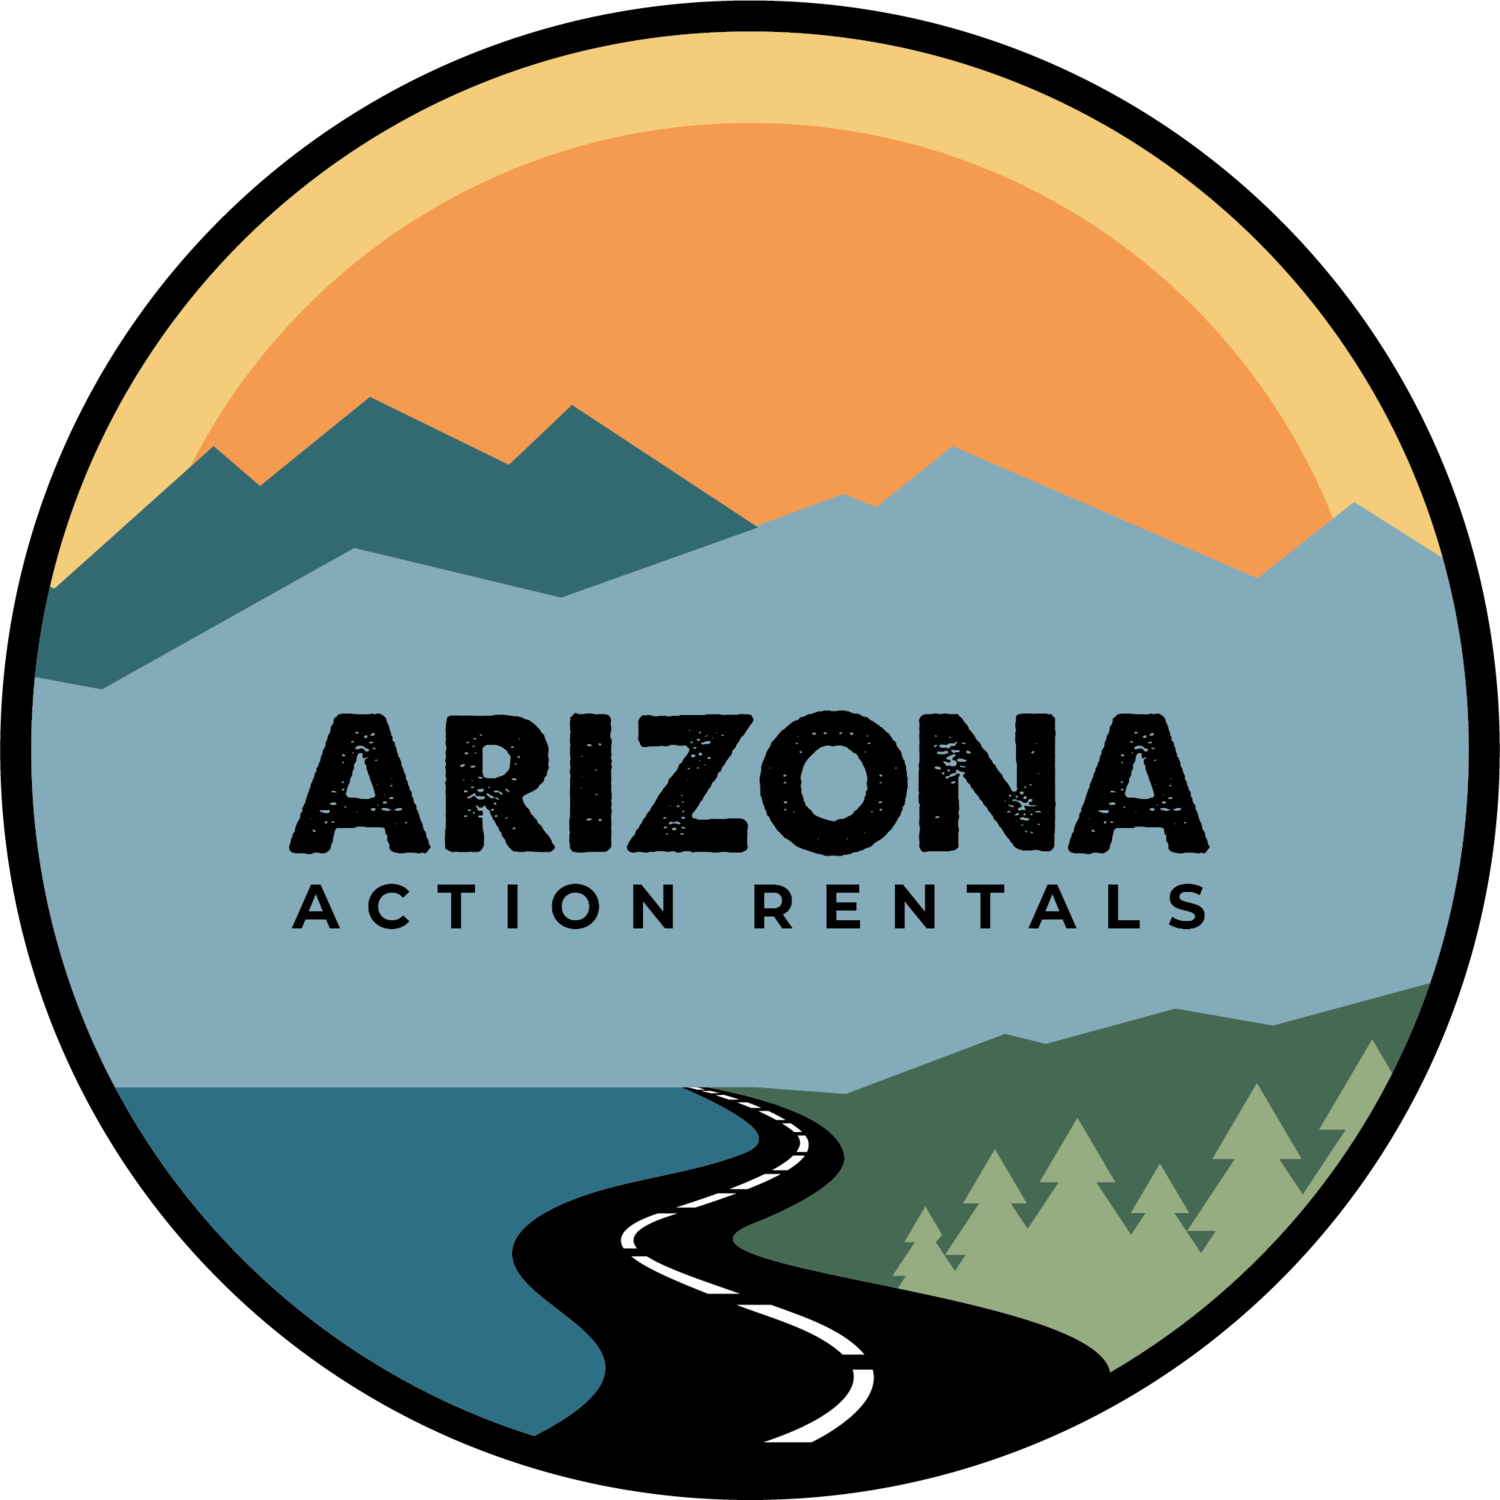 Arizona Action Rentals